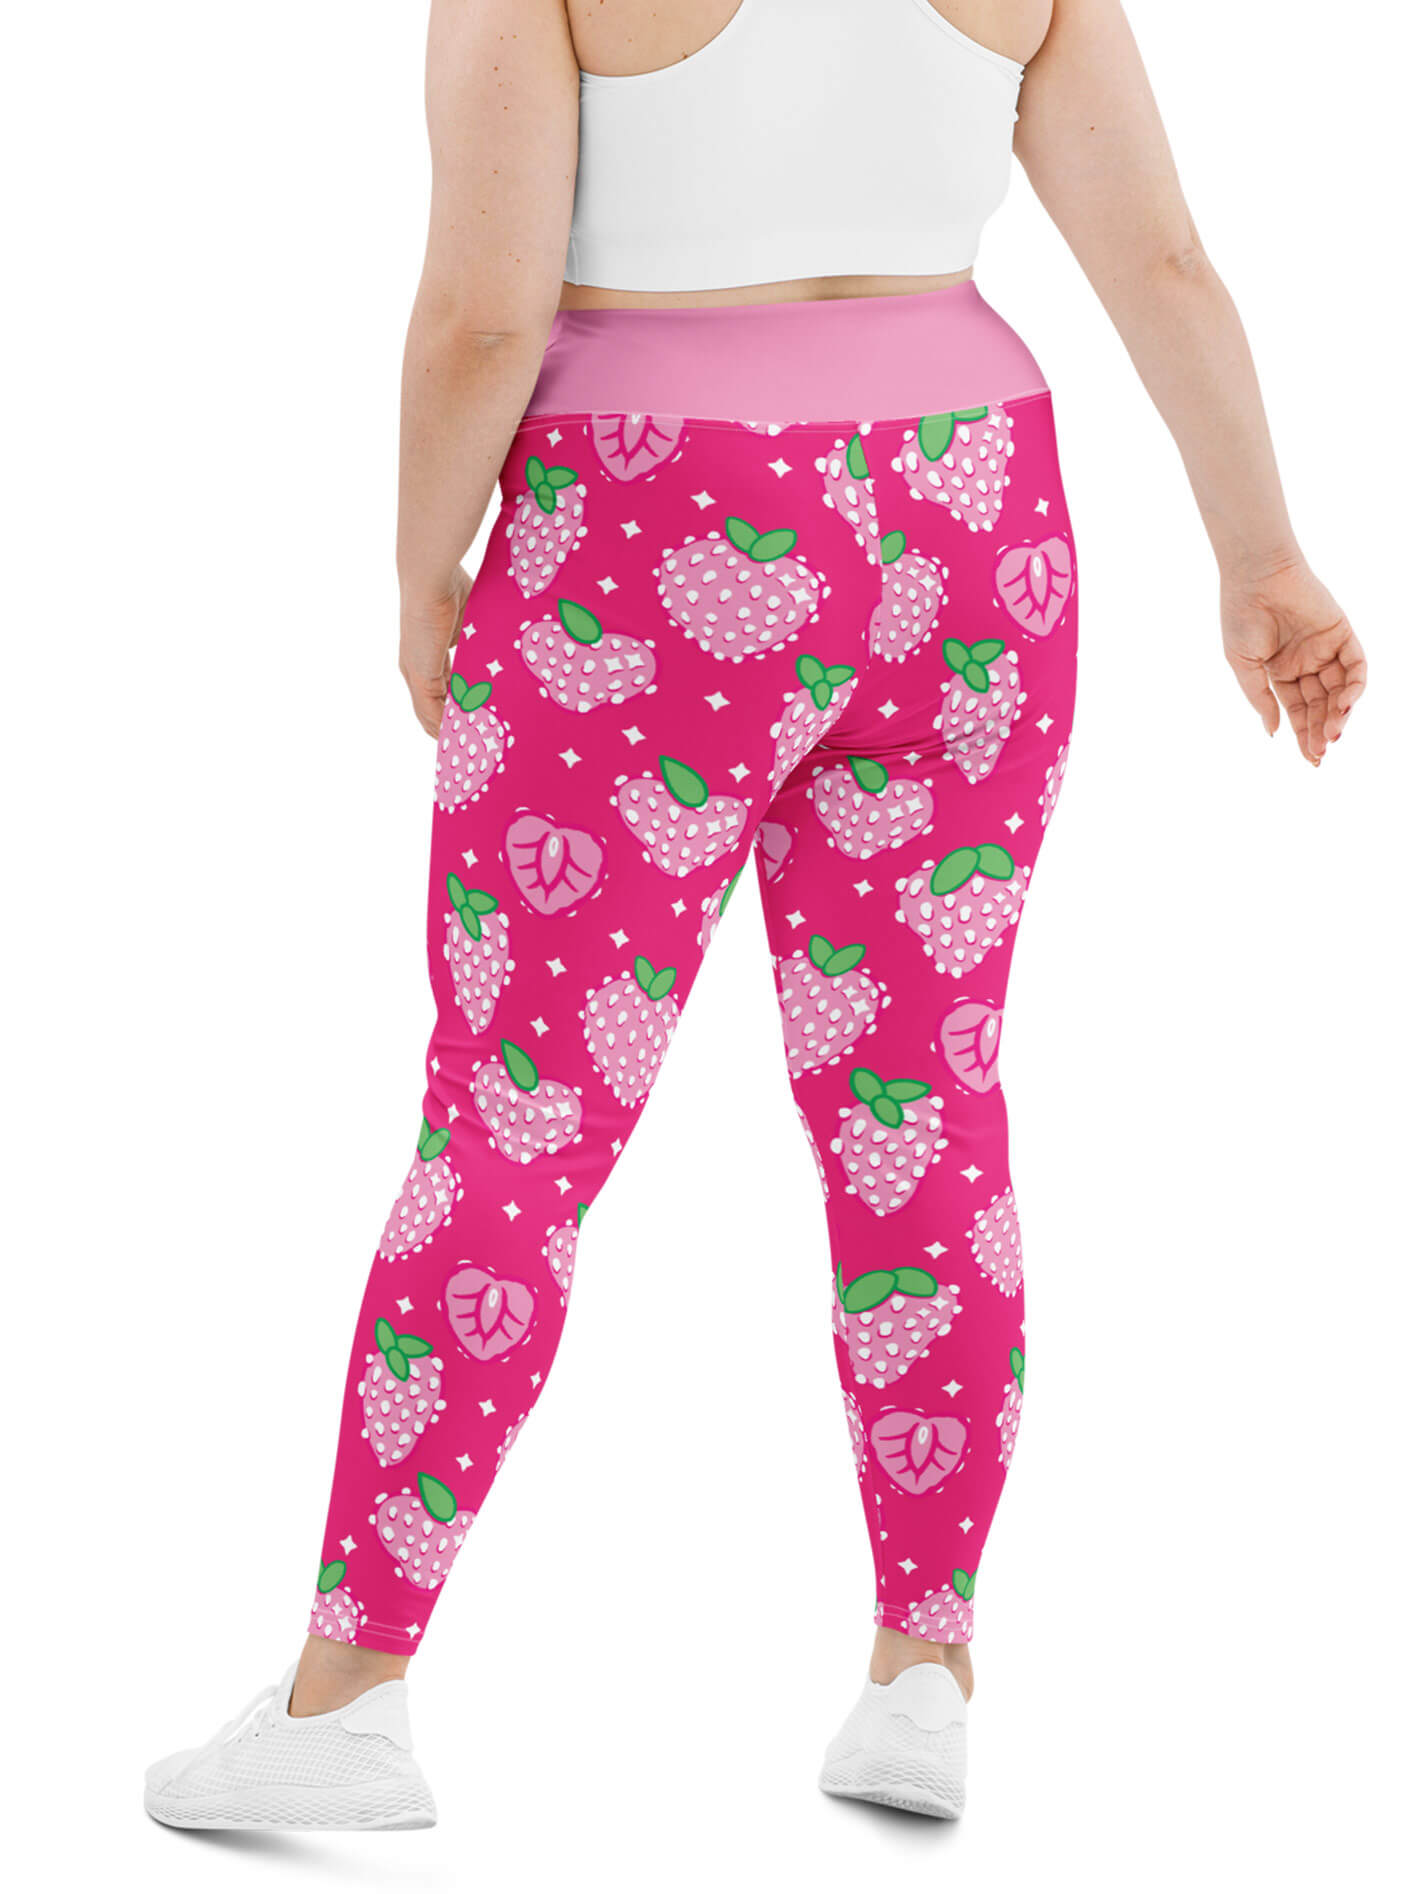 Strawberry plus size leggings.